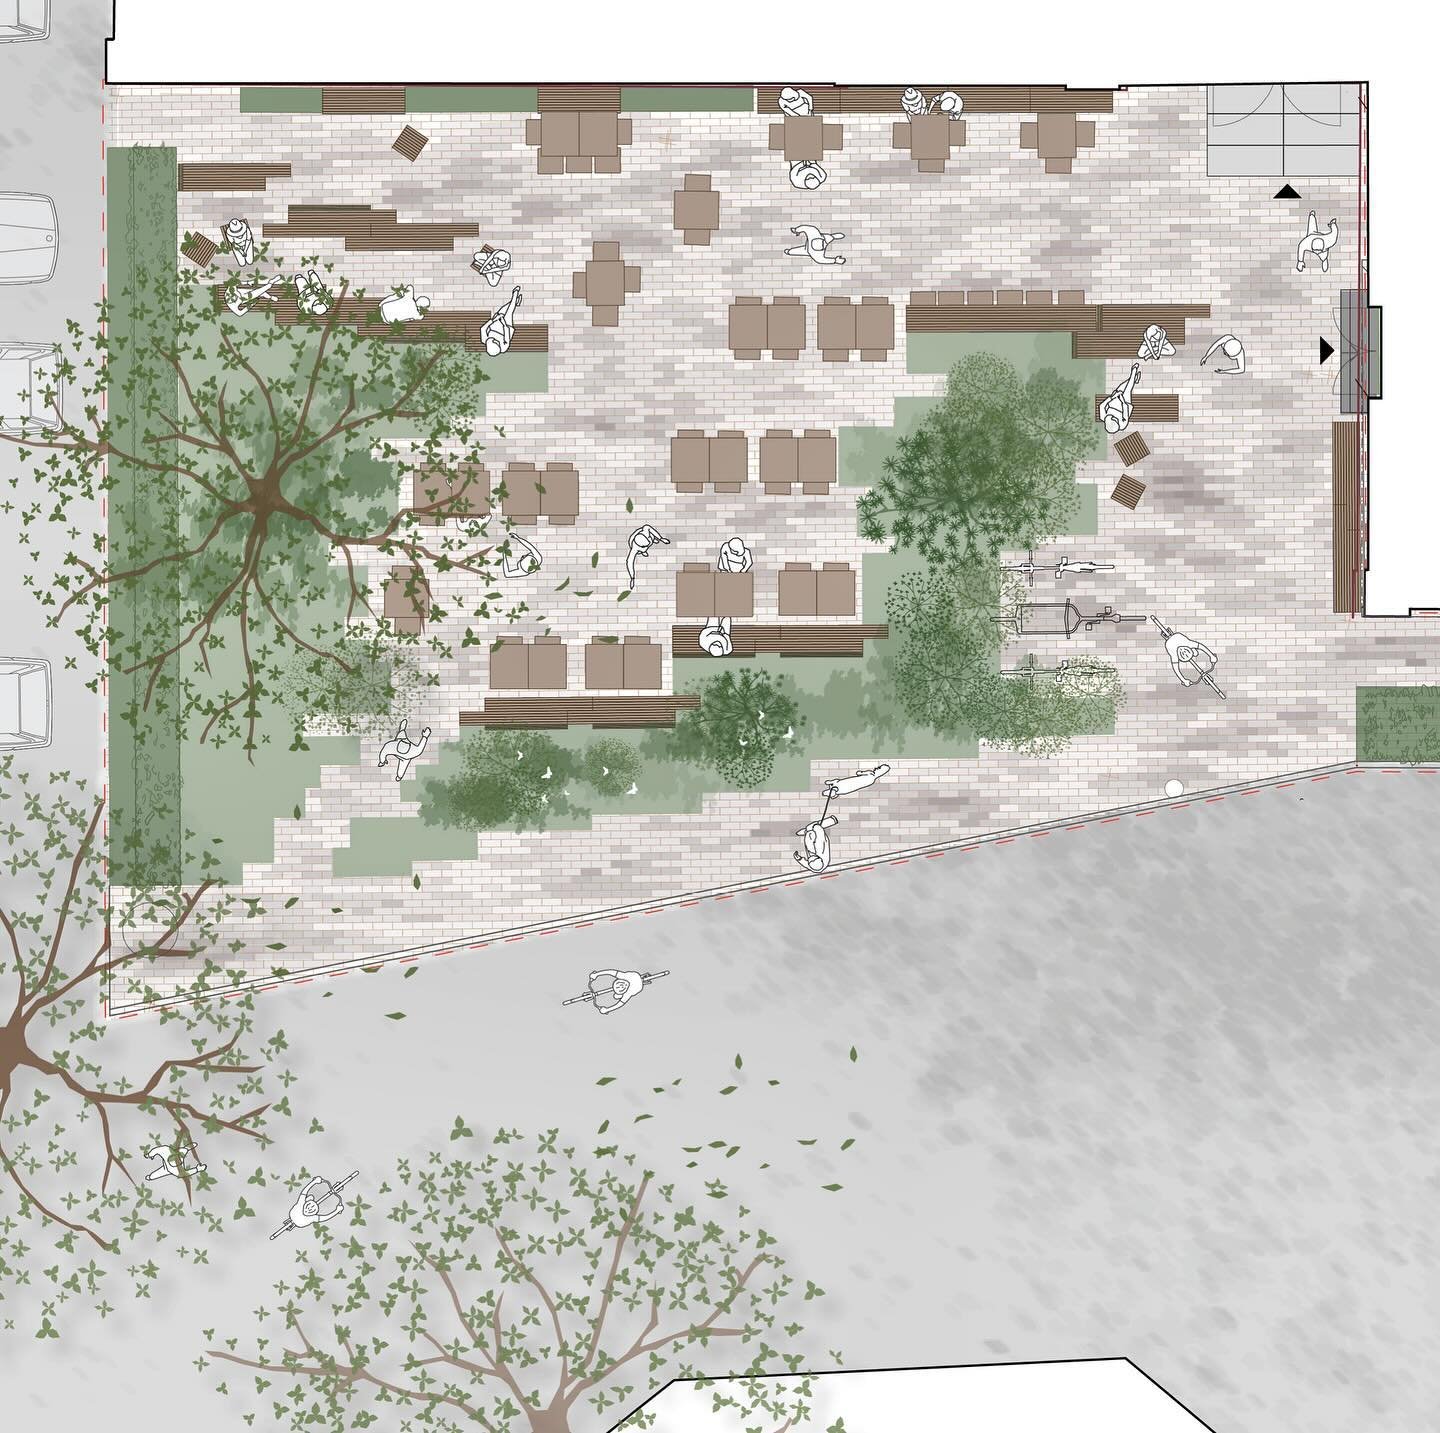 Illustrasjonsplan av Drammensveien 130

#plandrawing #landscapeplan #cityplanning #urbandevelopment #landscapeurbanism